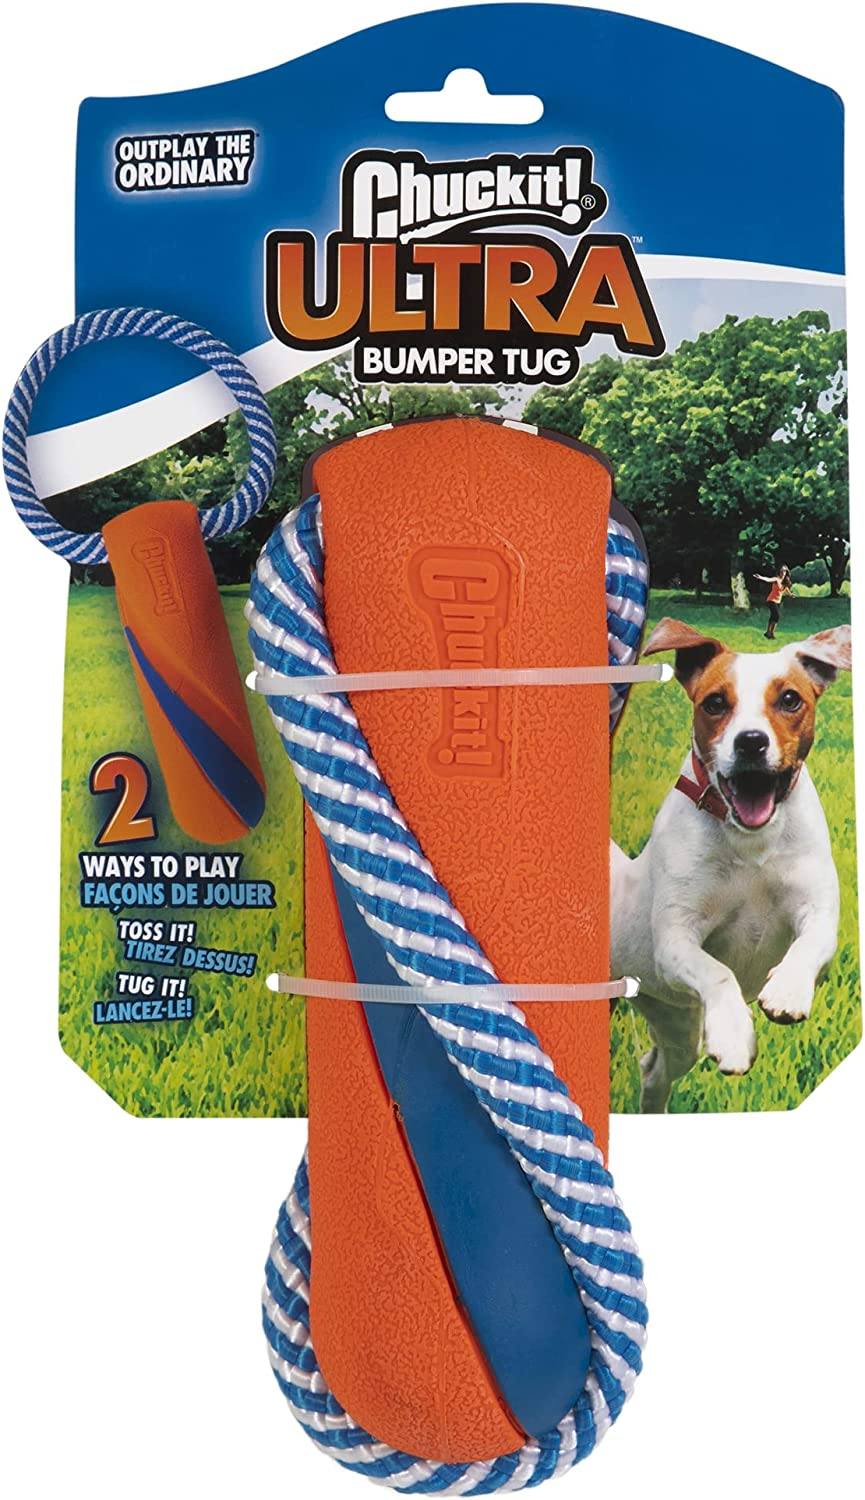 Chuckit! Ultra Bumper Tug Dog Toy $5.59